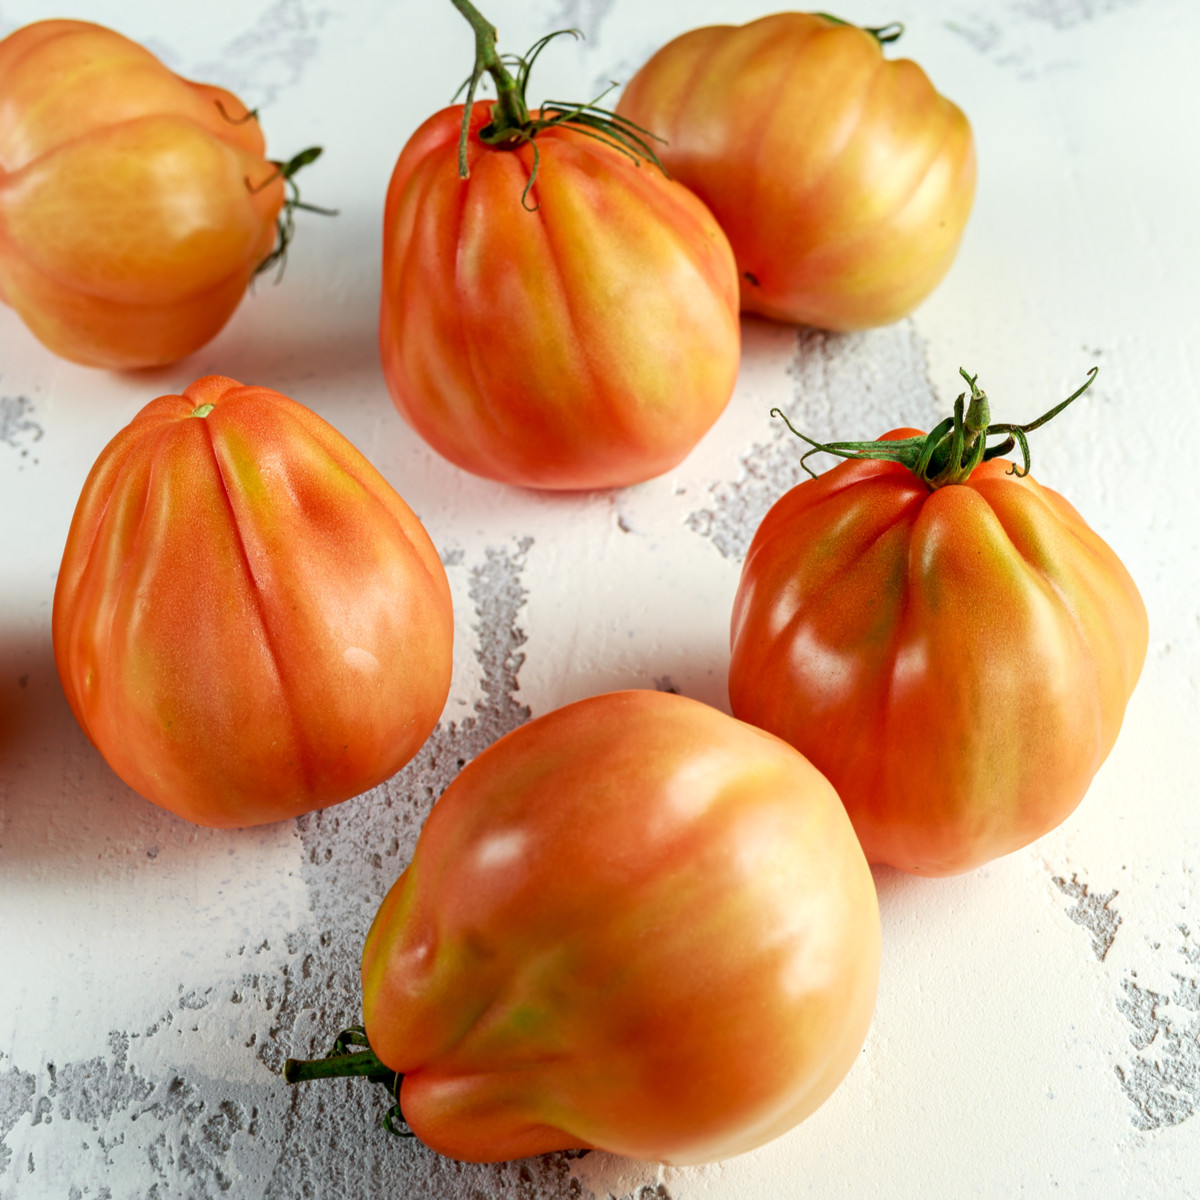 BIO Rajče Coure di Bue oranžové - Solanum lycopersicum - bio semena rajčete - 8 ks